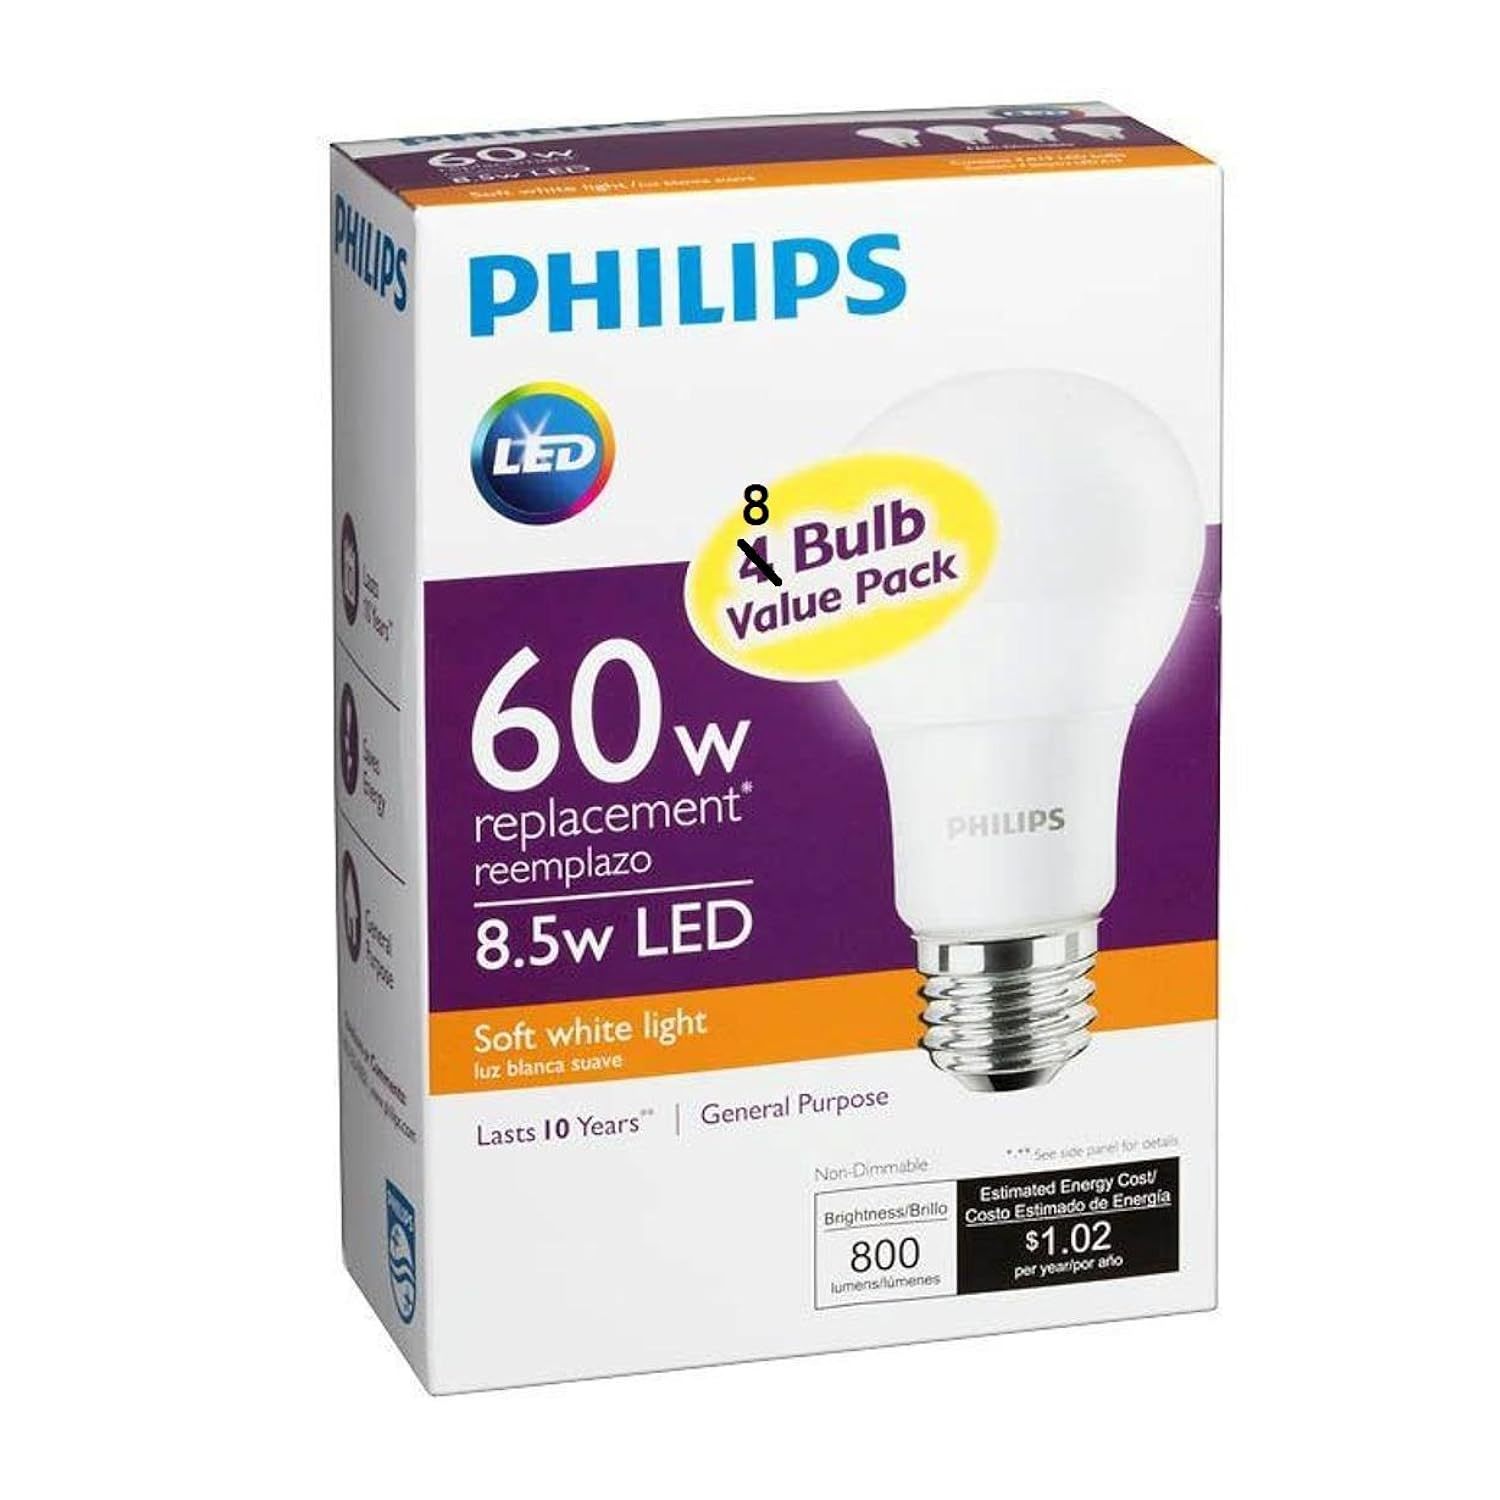 Philips 455576 60W Equivalent 2700K A19 LED Light Bulb, Soft White (2-Pack) - $51.29